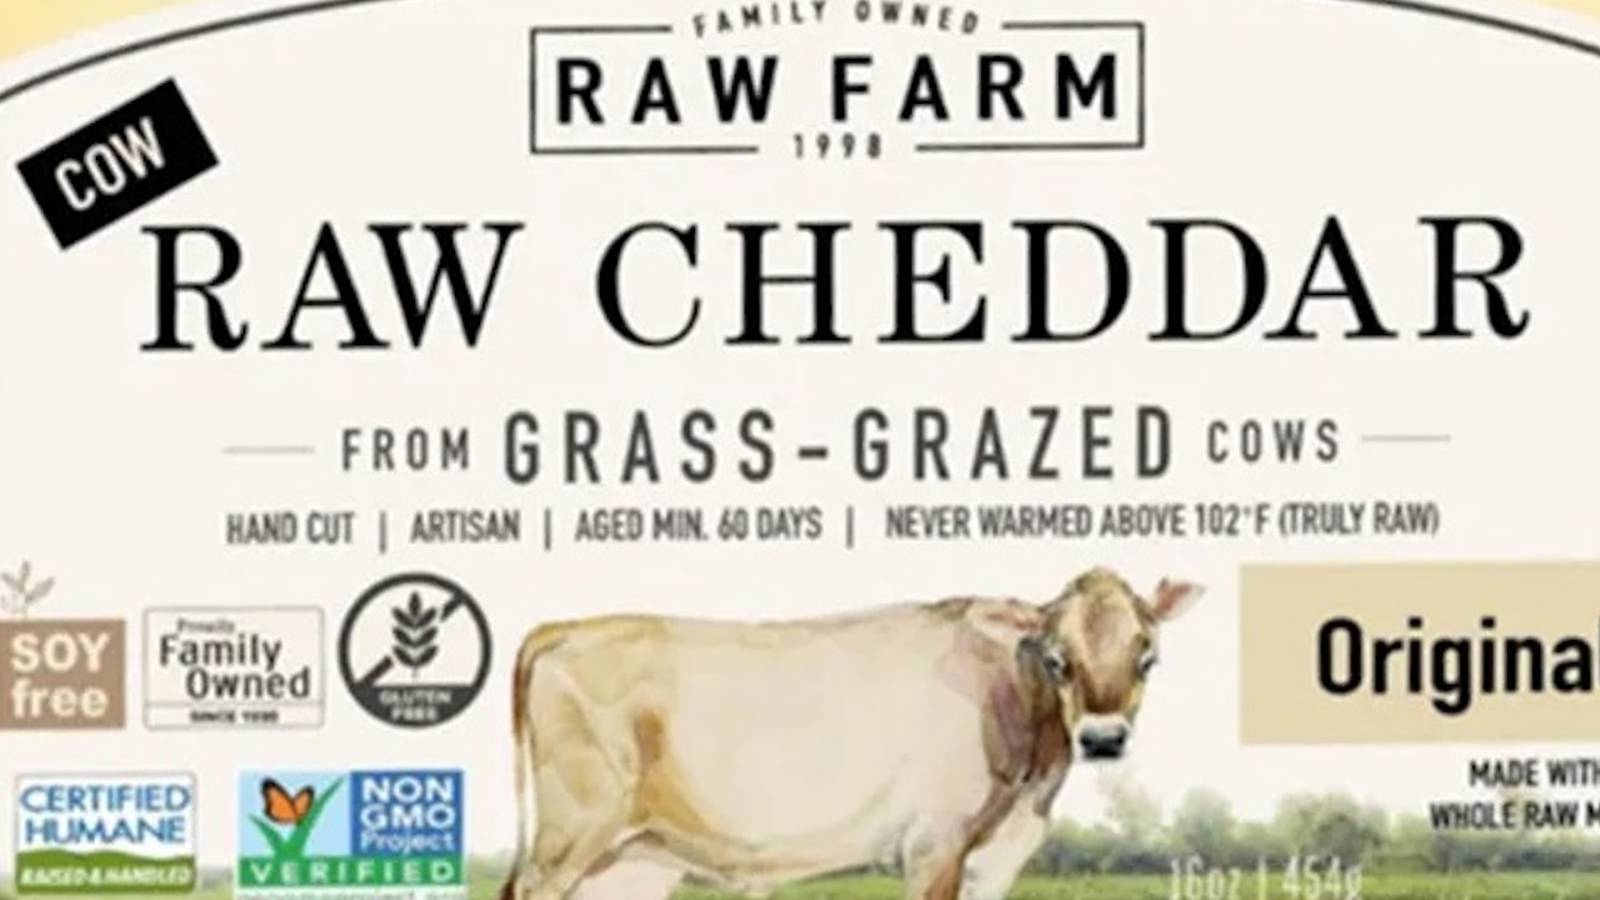 Recall alert Raw Farm voluntarily recalls cheddar cheese over E. coli